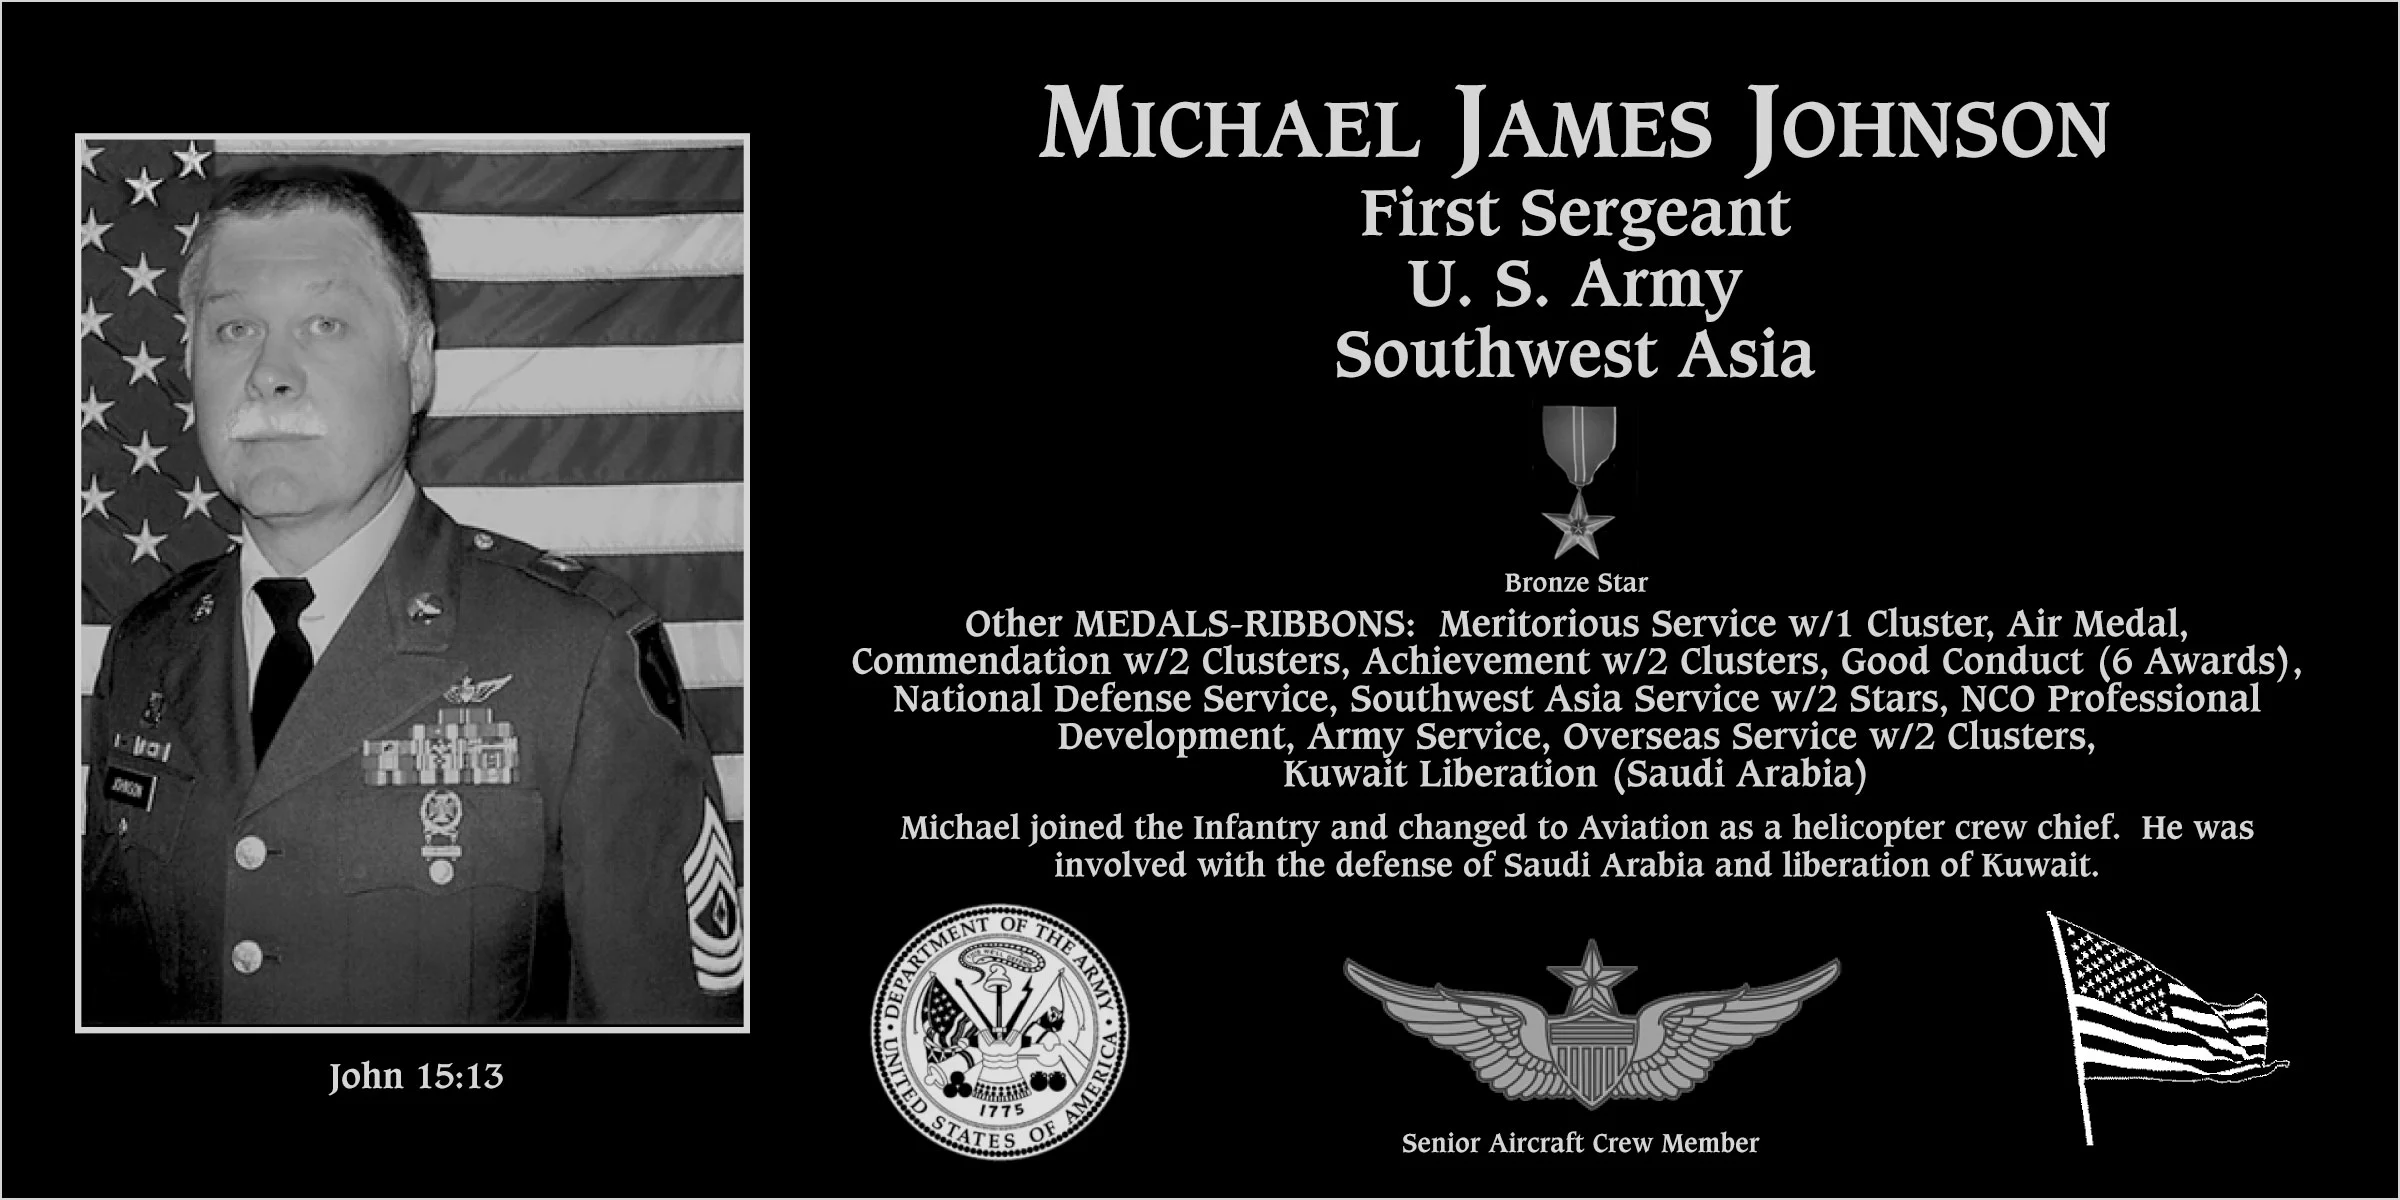 Michael James Johnson